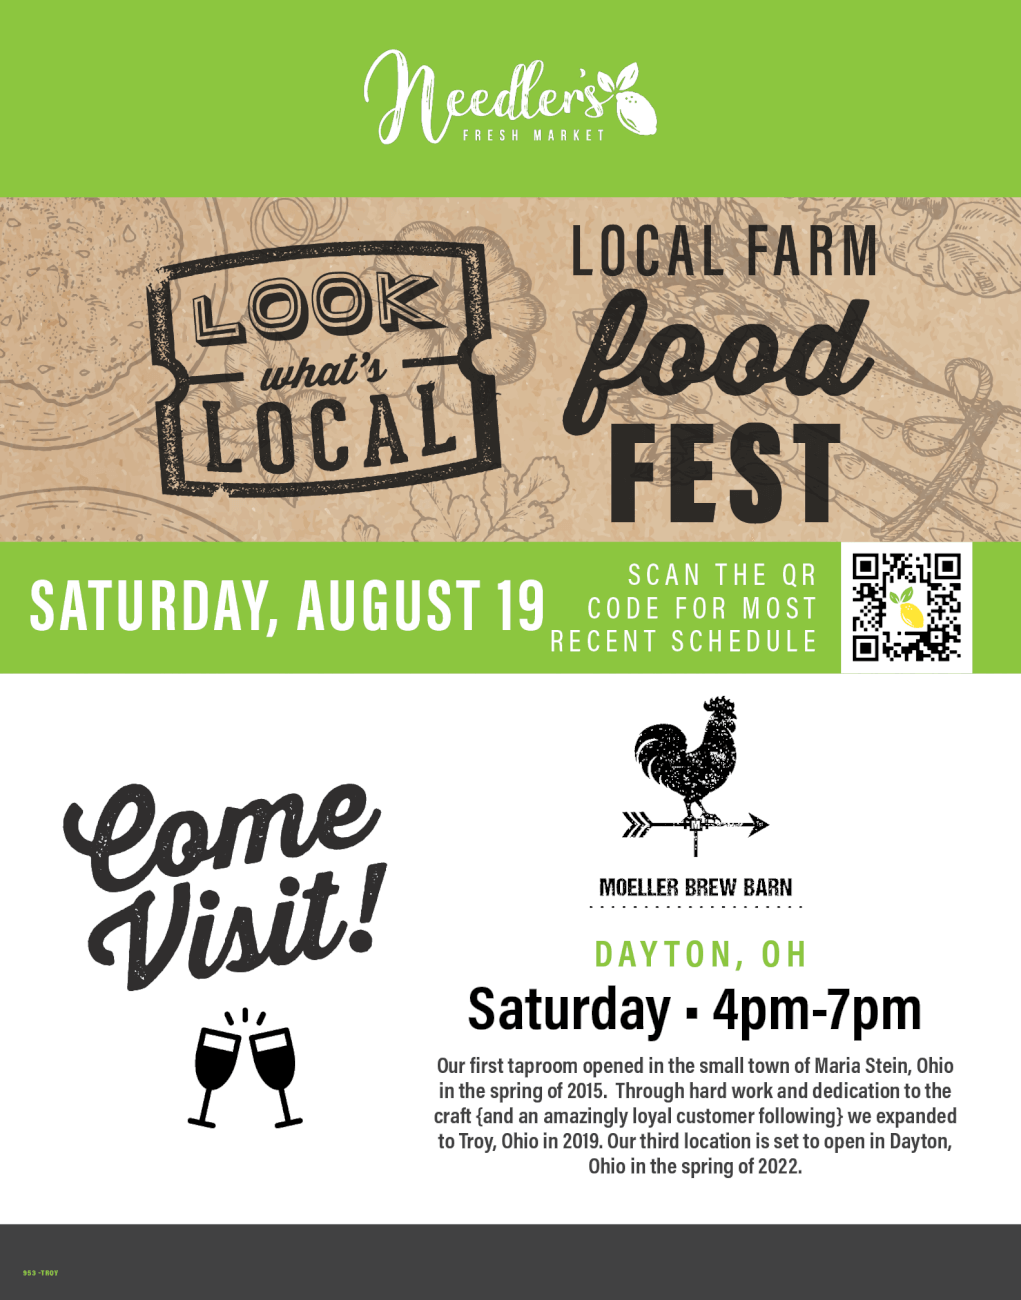 Local Farm Food Fest, August 18-19